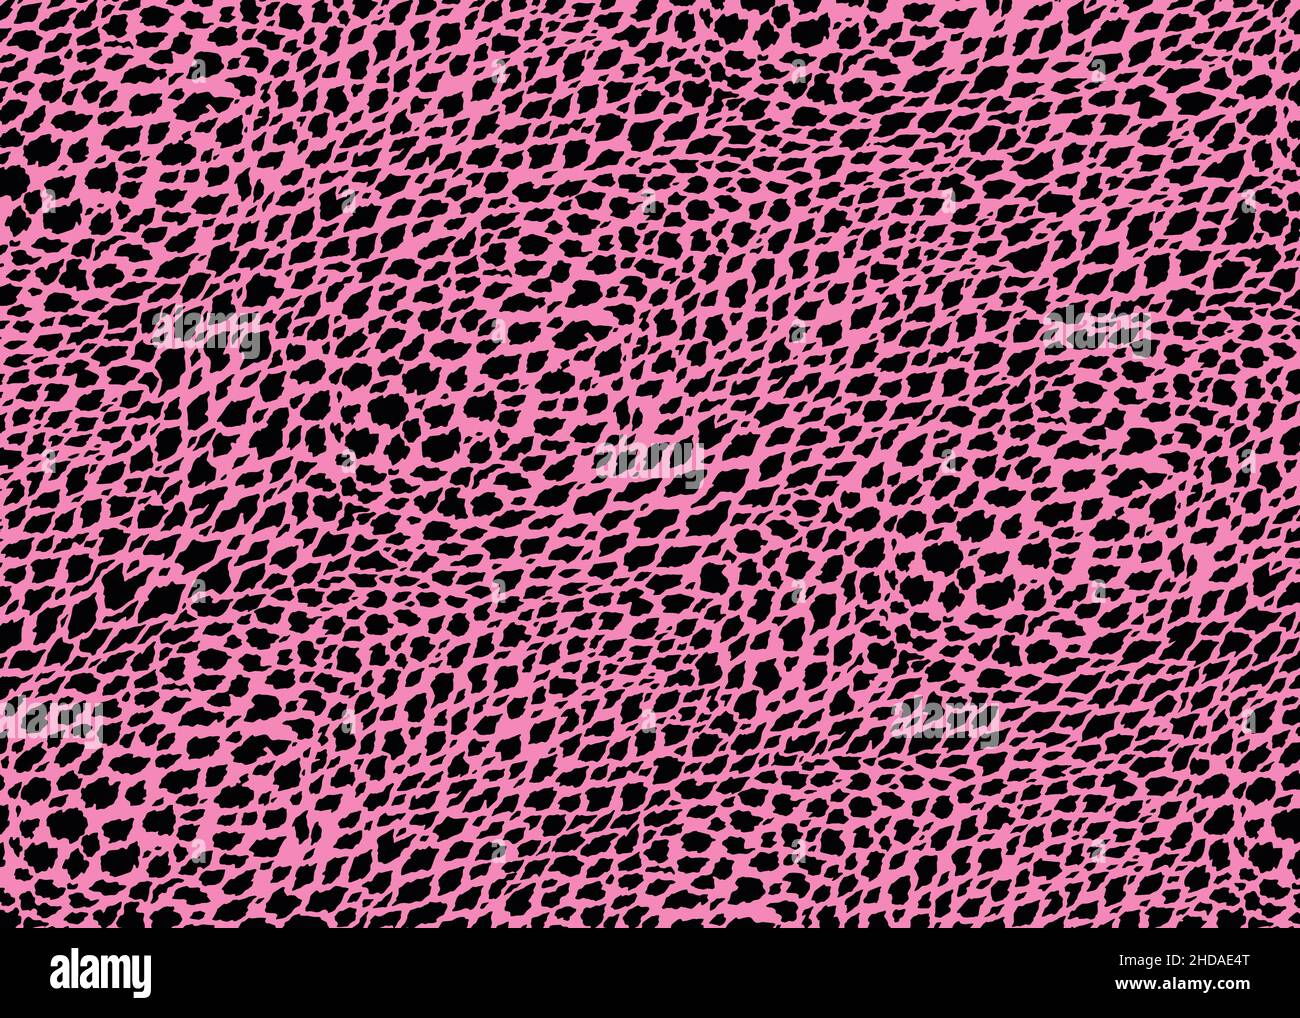 Purple Cheetah skin pattern design. Vector illustration background. For print, textile, web, home decor, fashion, surface, graphic design Stock Vector